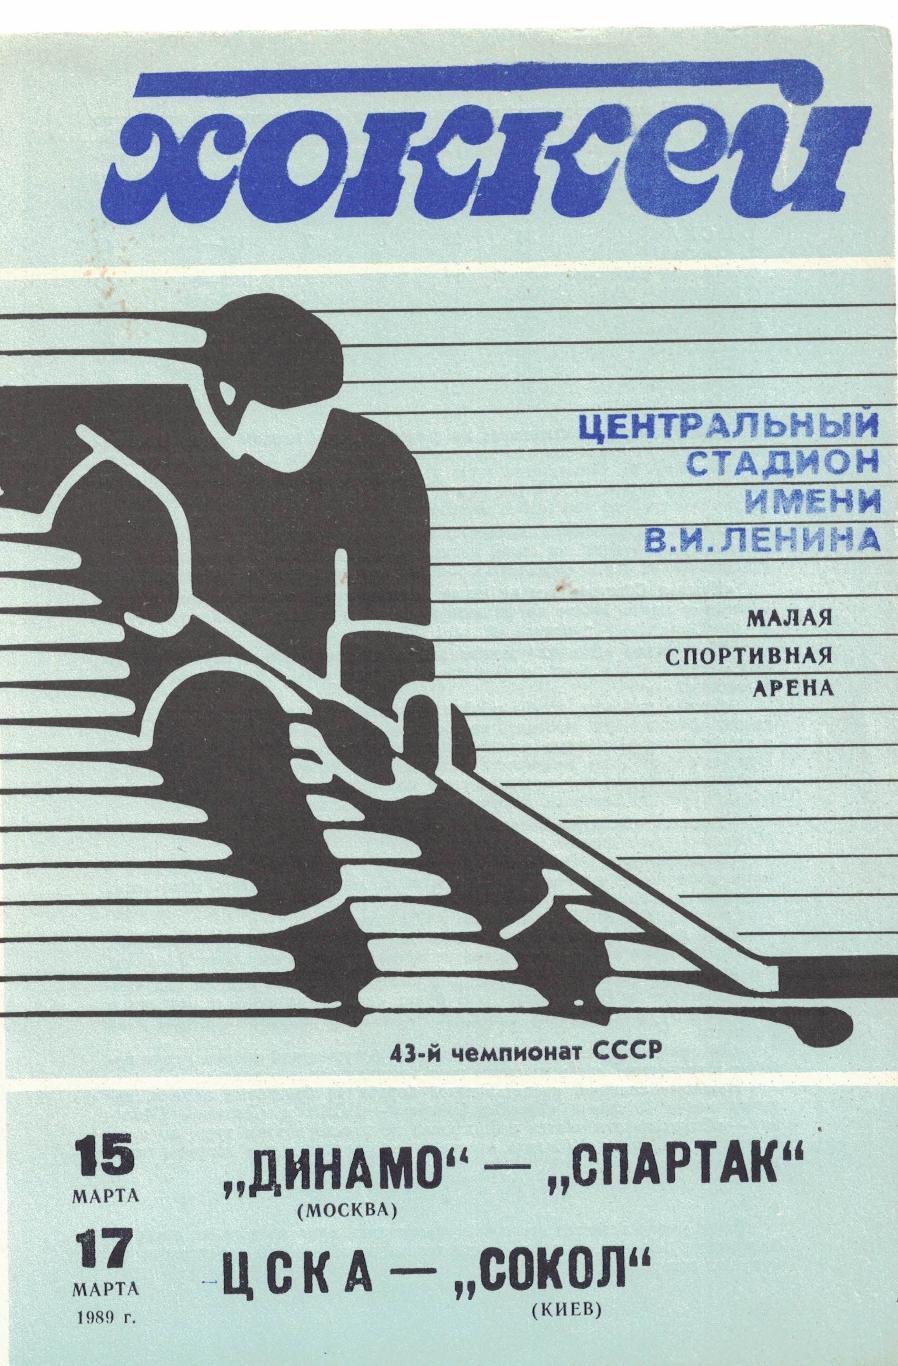 1989 Хоккей Динамо Москва - Спартак Москва - ЦСКА - Сокол